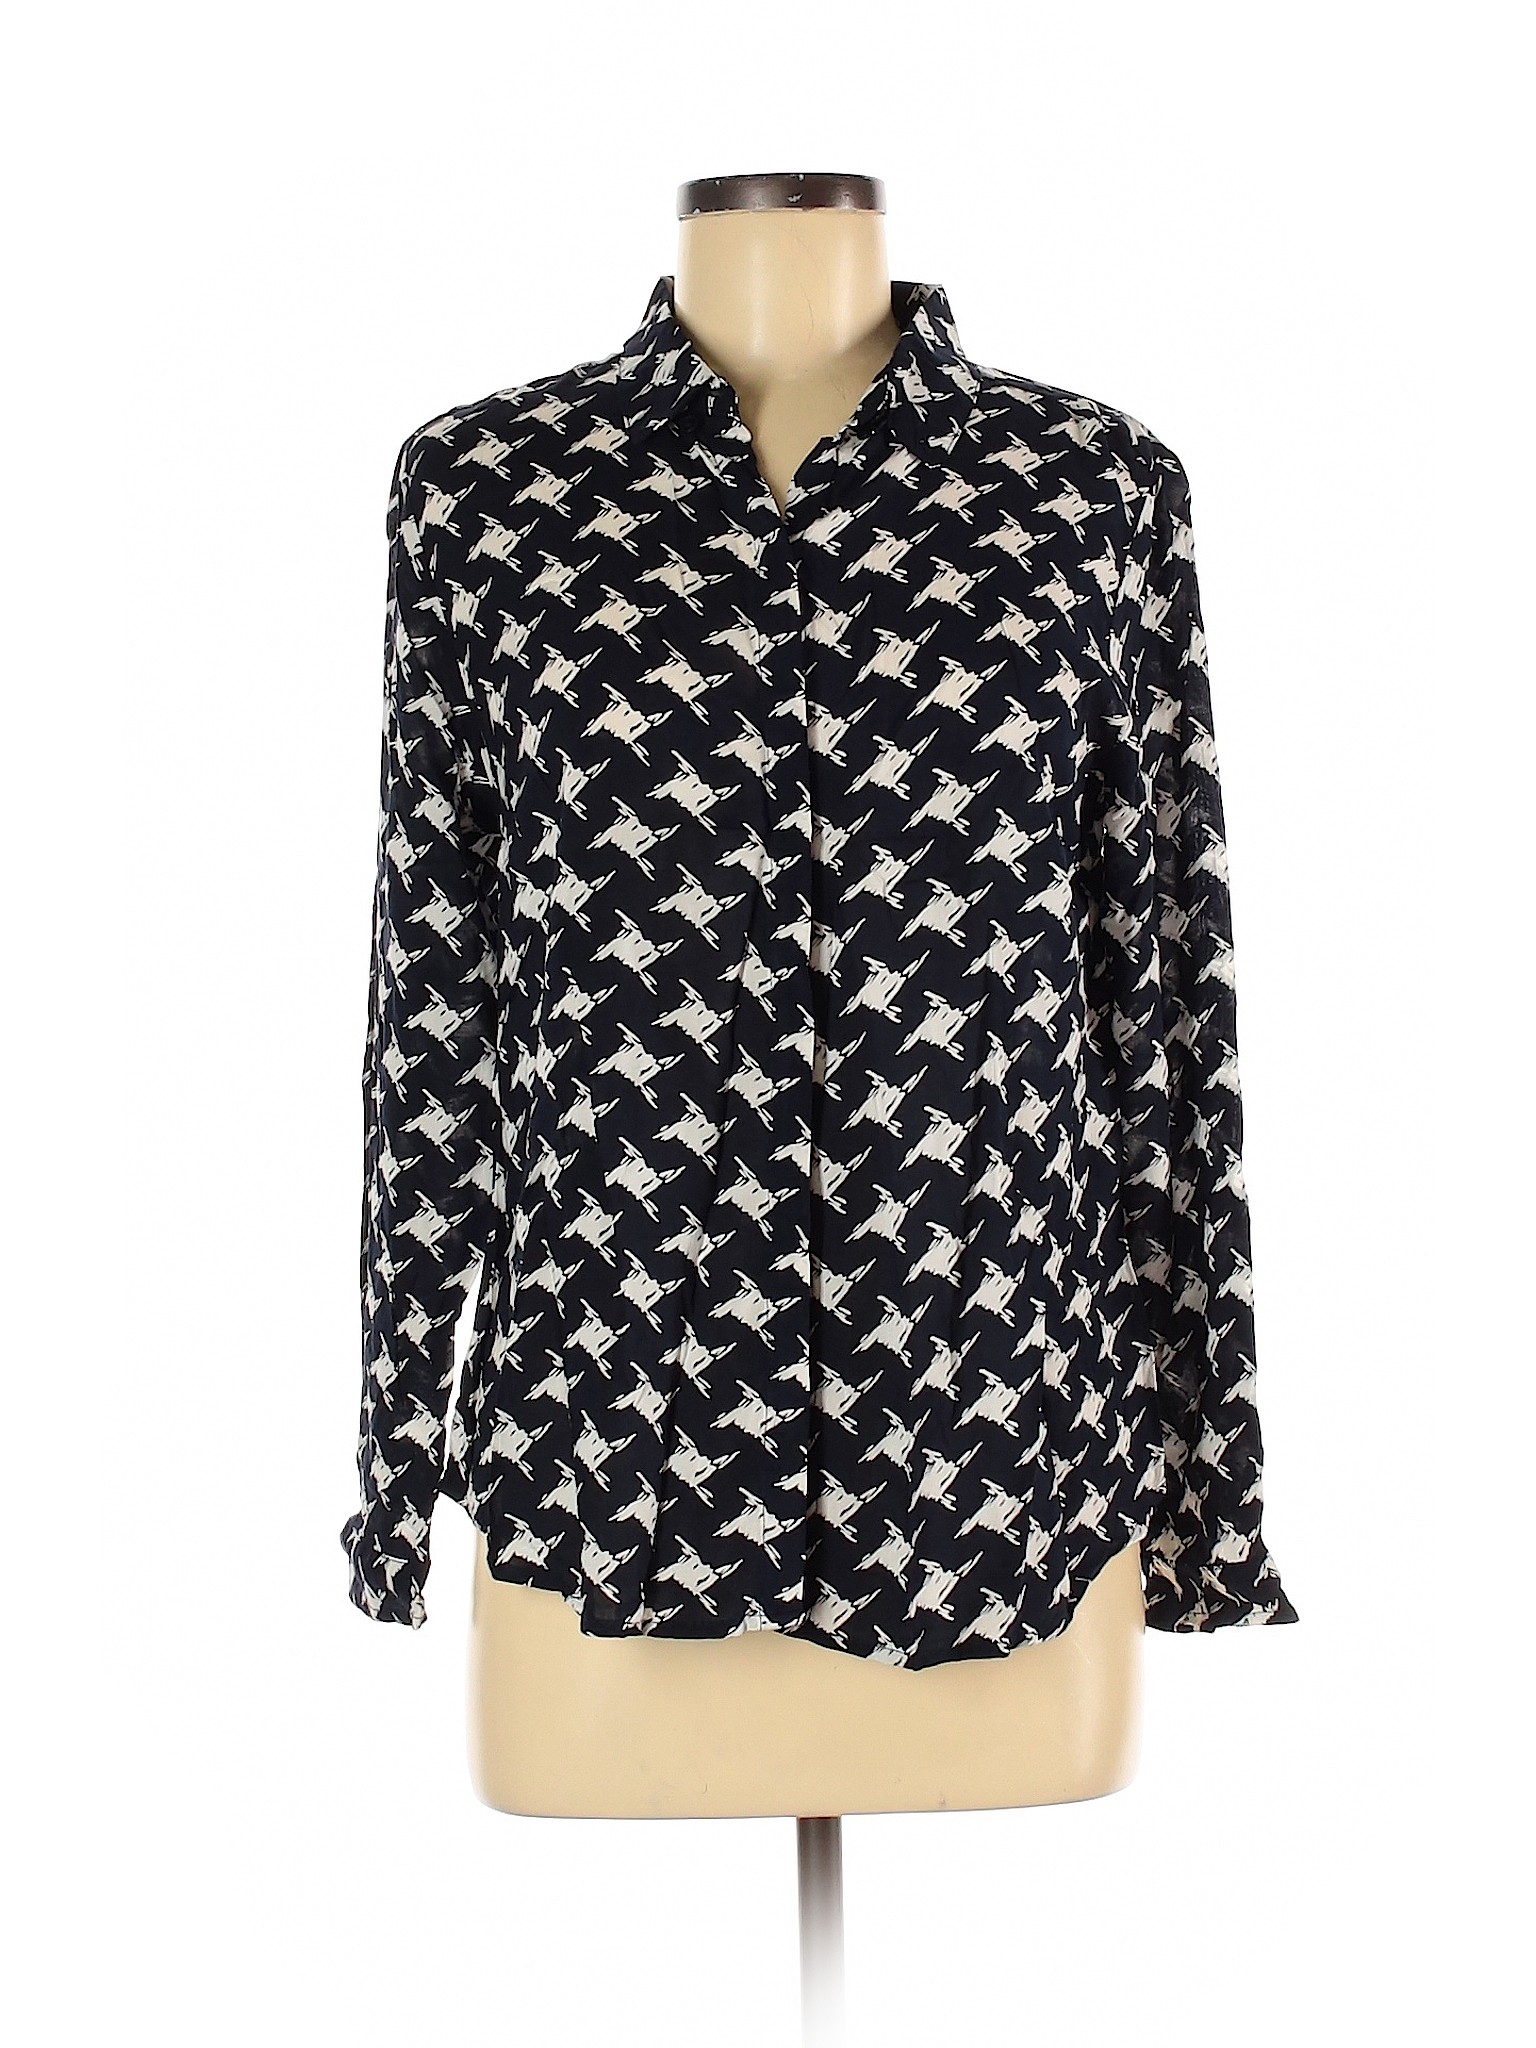 Liz Claiborne Women Black Long Sleeve Button-Down Shirt M Petites | eBay